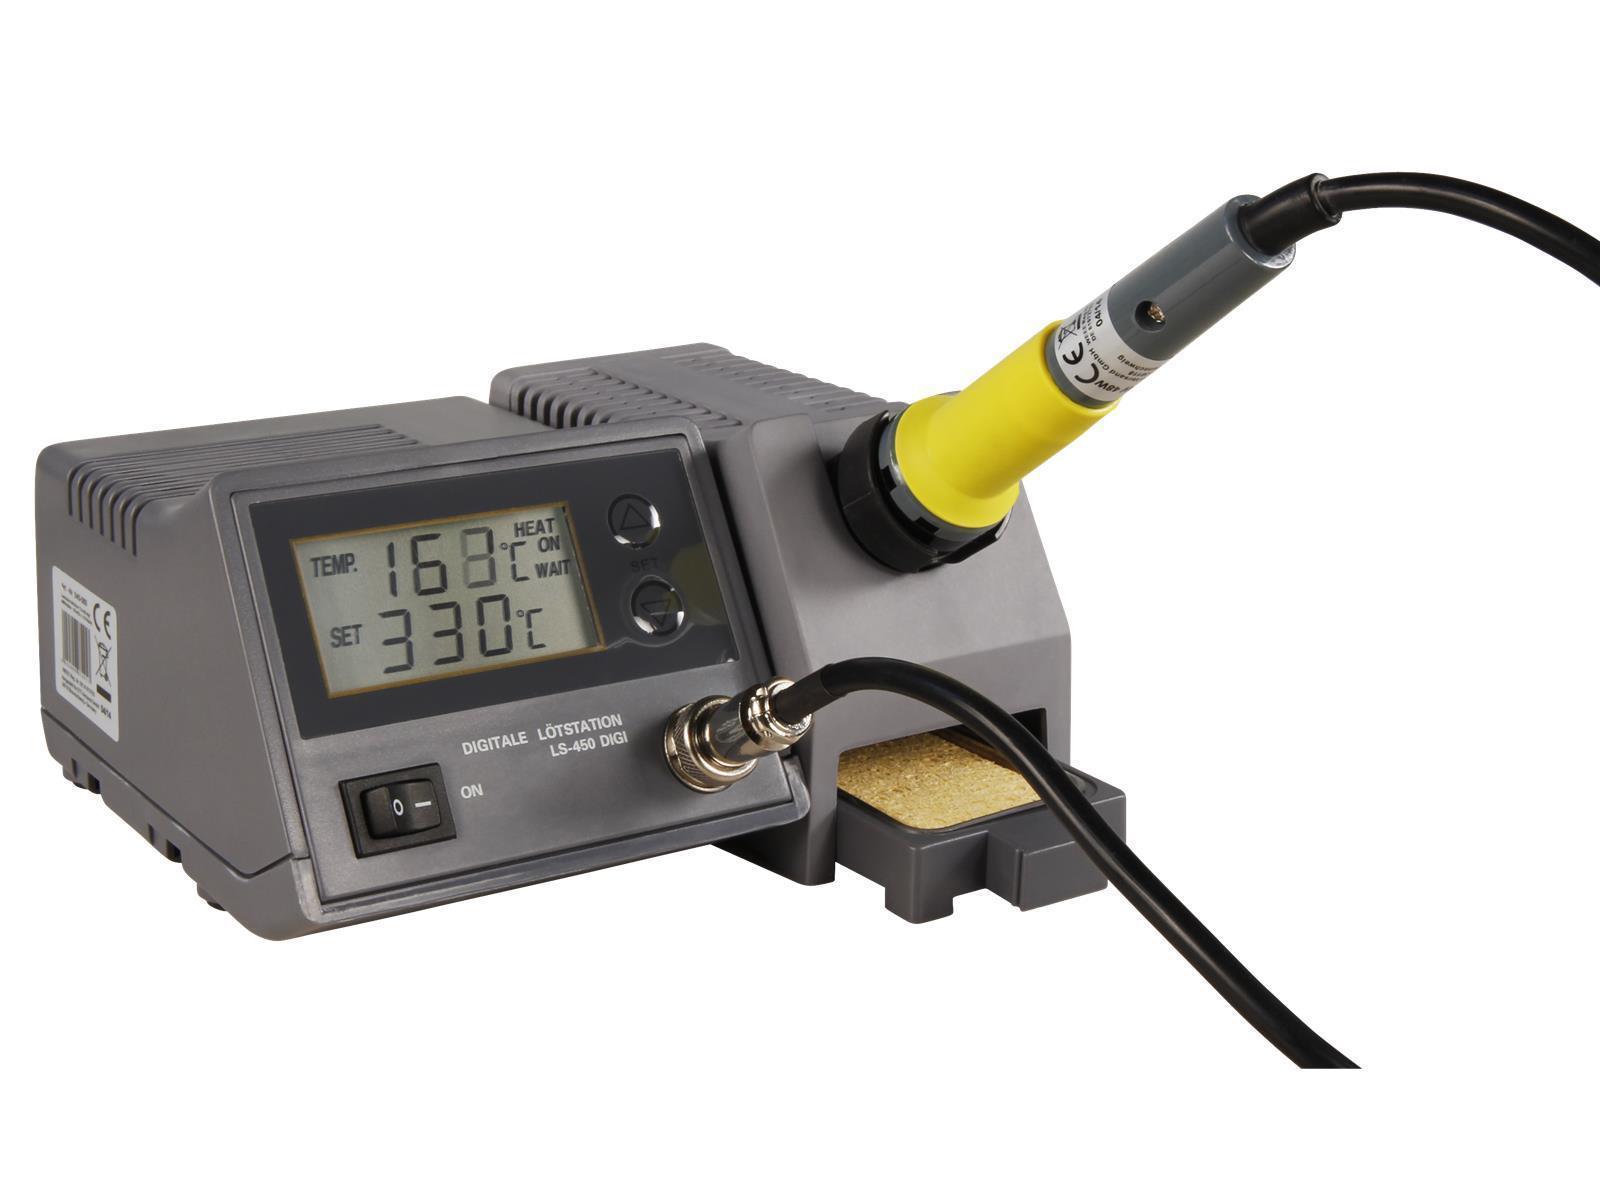 Digitale Lötstation McPower ''LS-450 digi'', 230V / 50 Hz, 48W-Lötkolben, grau